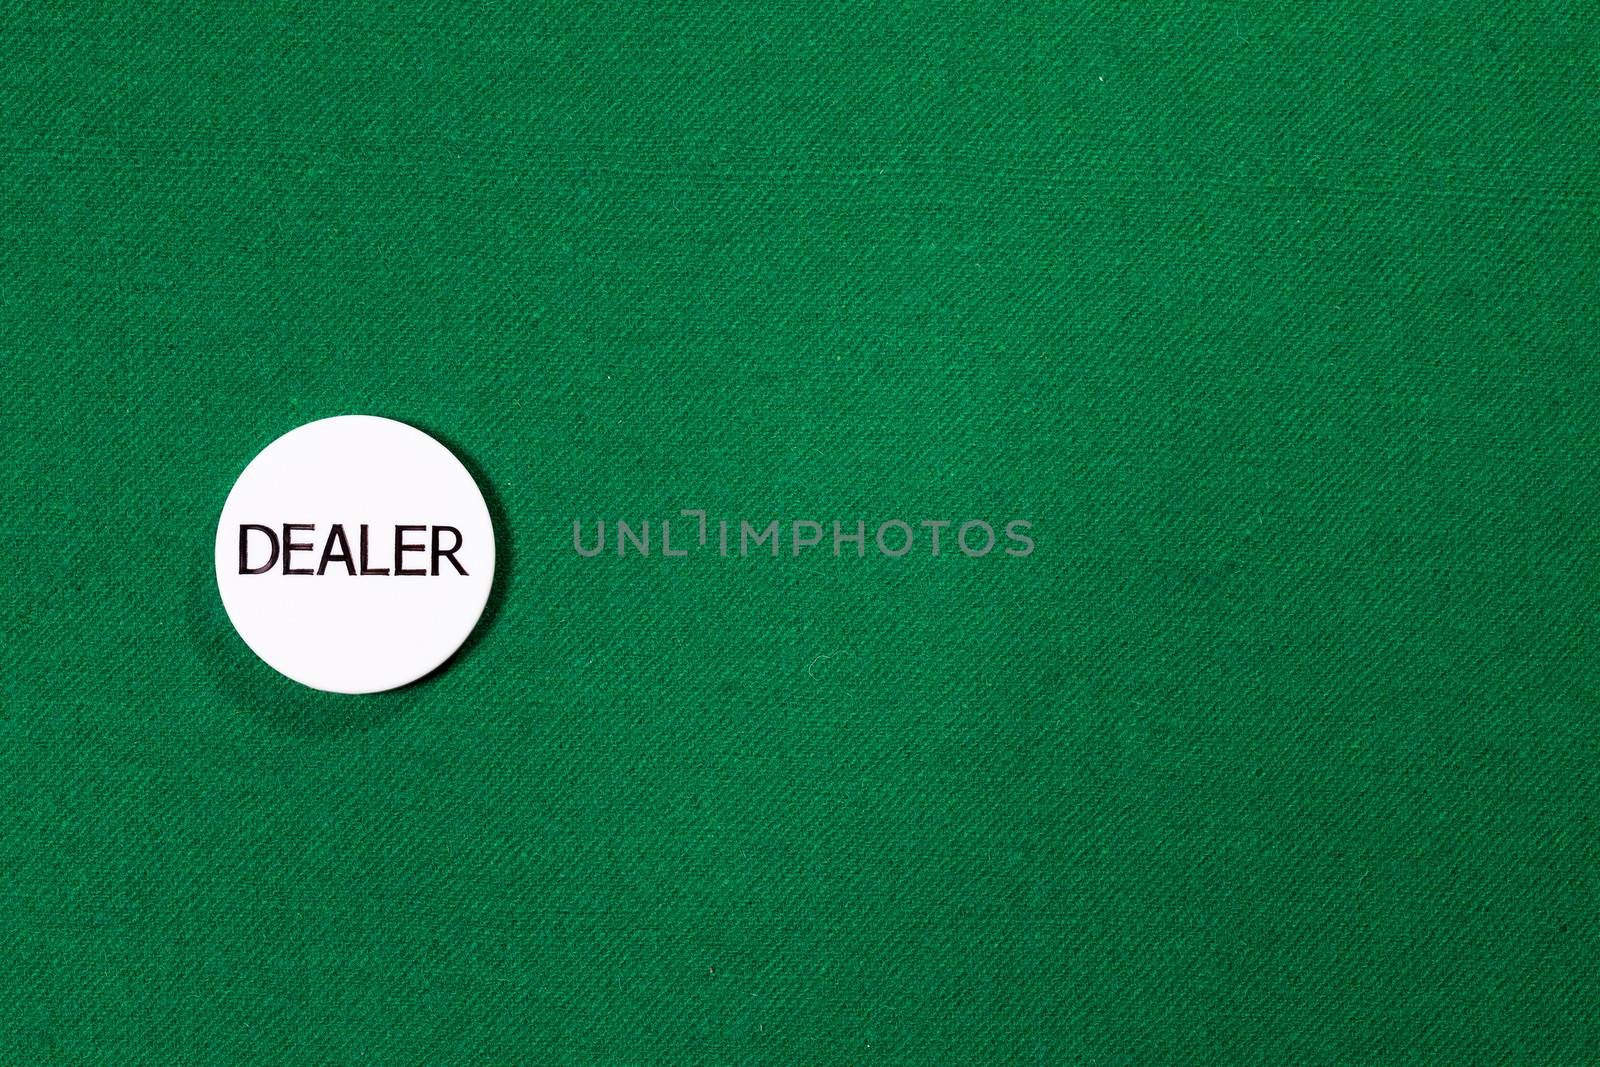 Poker dealer chip on green cloth